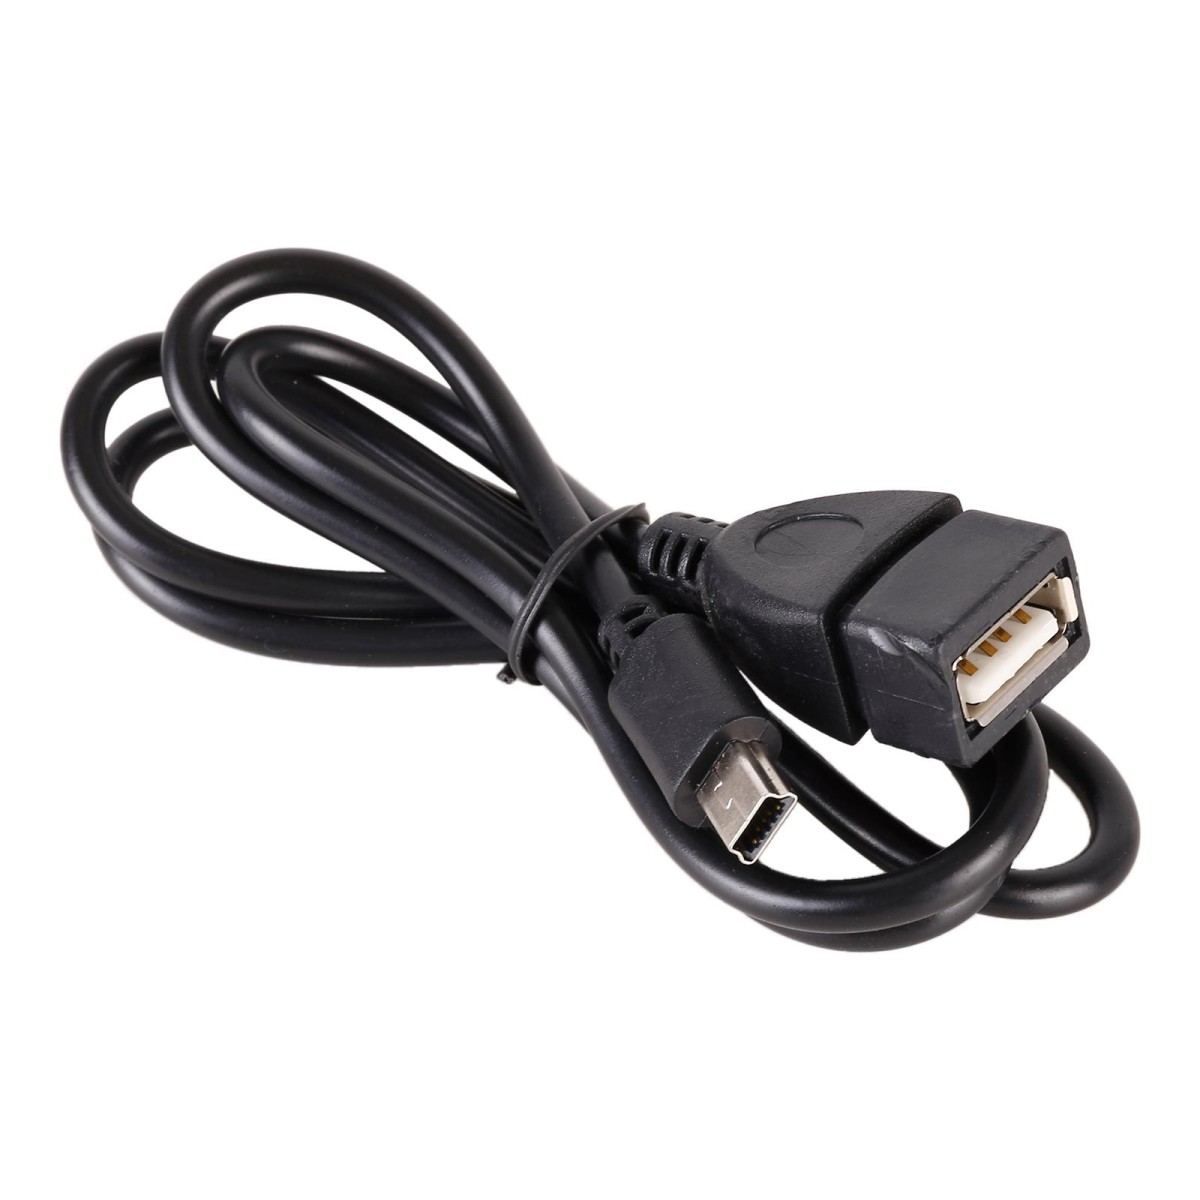 10 PCS Car OTG Head to USB Cable, Cable Length: 80cm